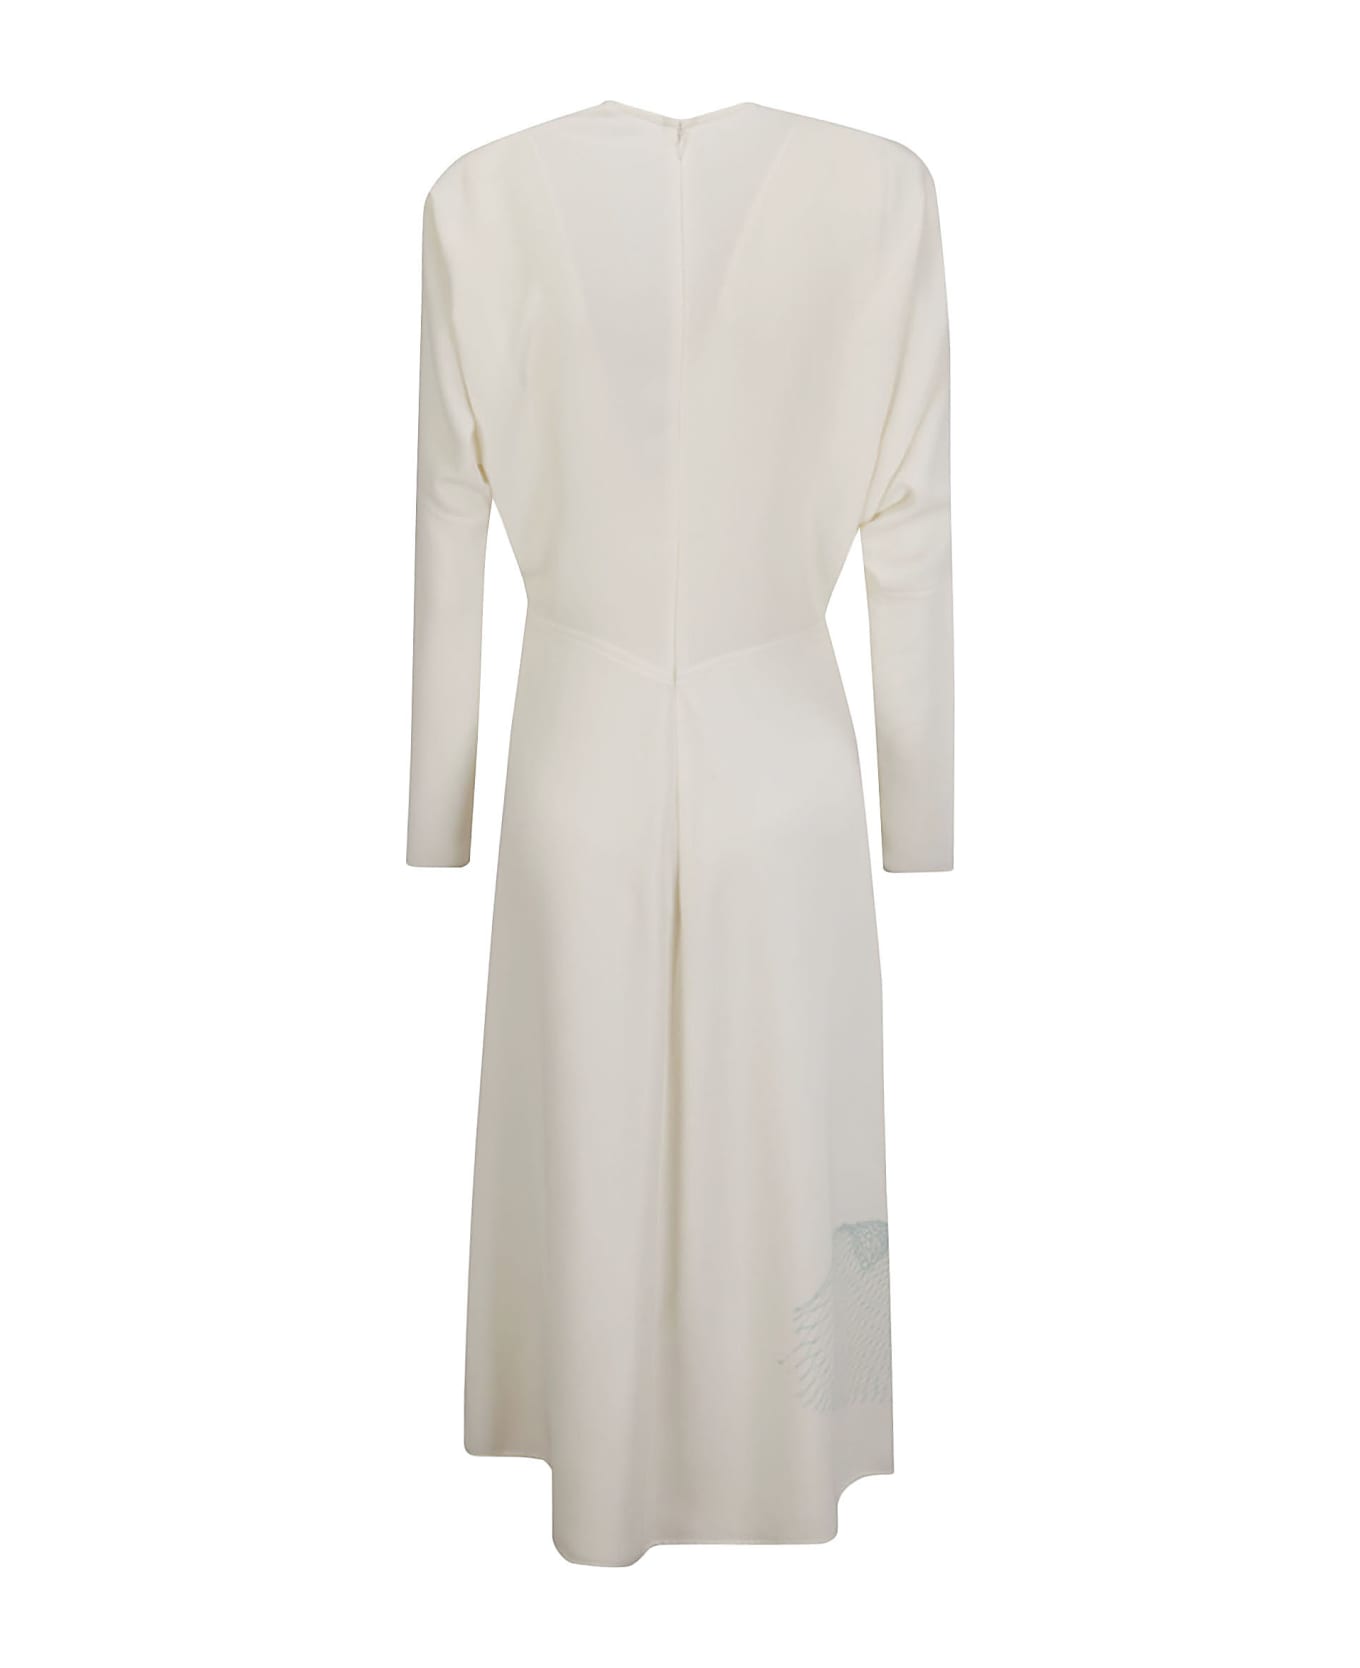 Victoria Beckham Long Sleeve Dolman Midi Dress - CONTORTED NET - WHITE/VPR BLUE